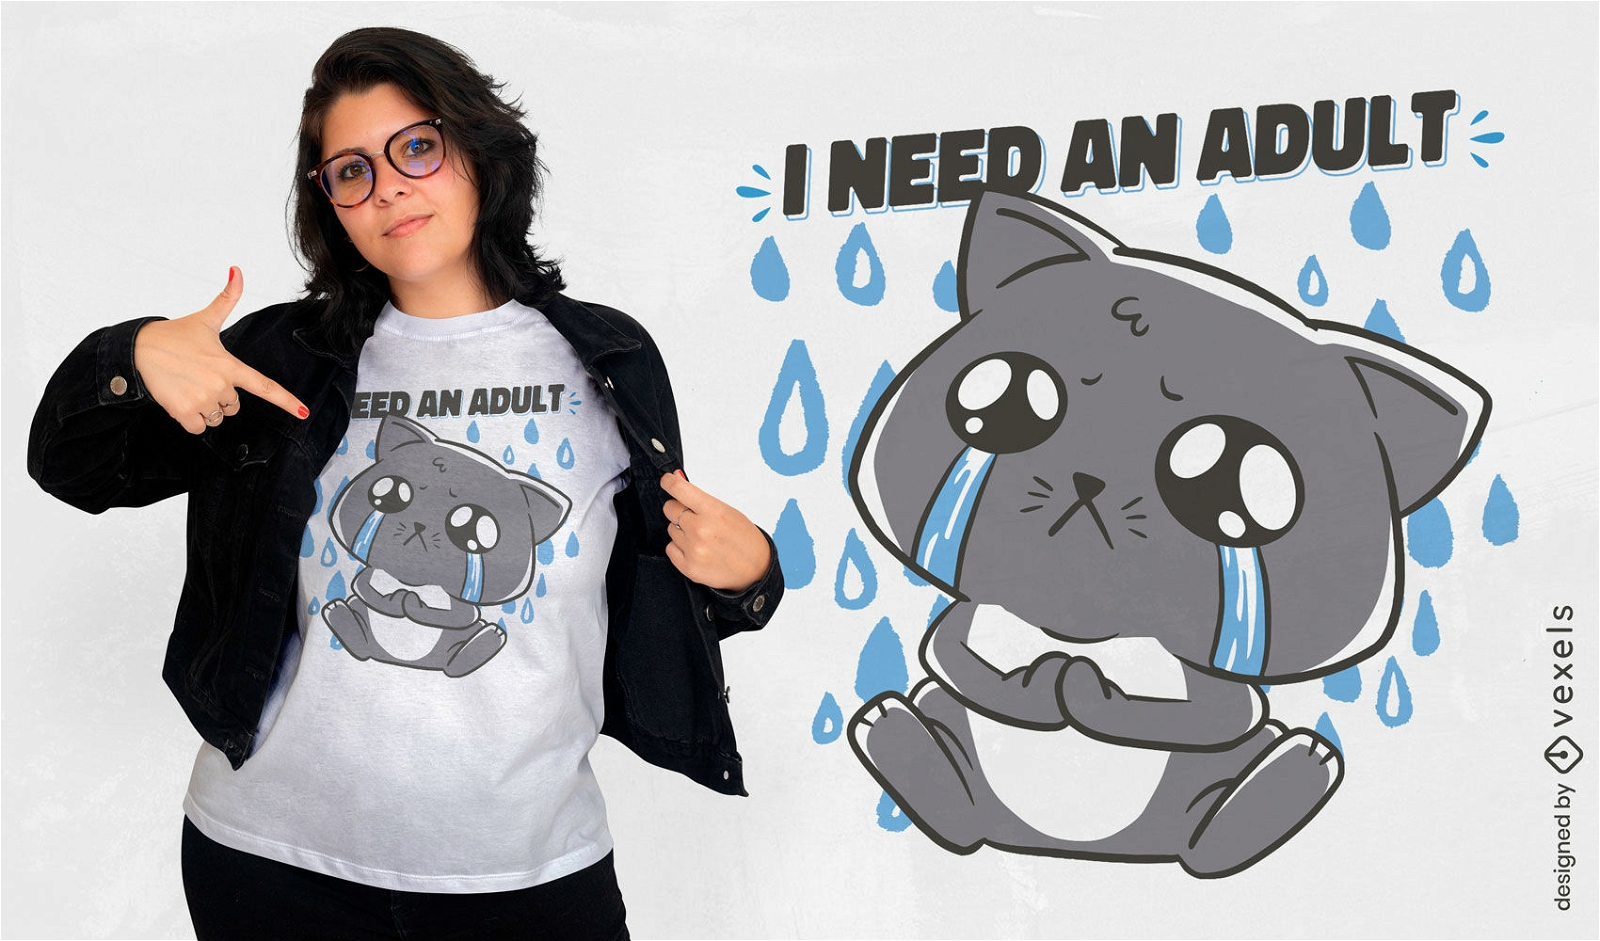 Cat animal crying cartoon t-shirt design